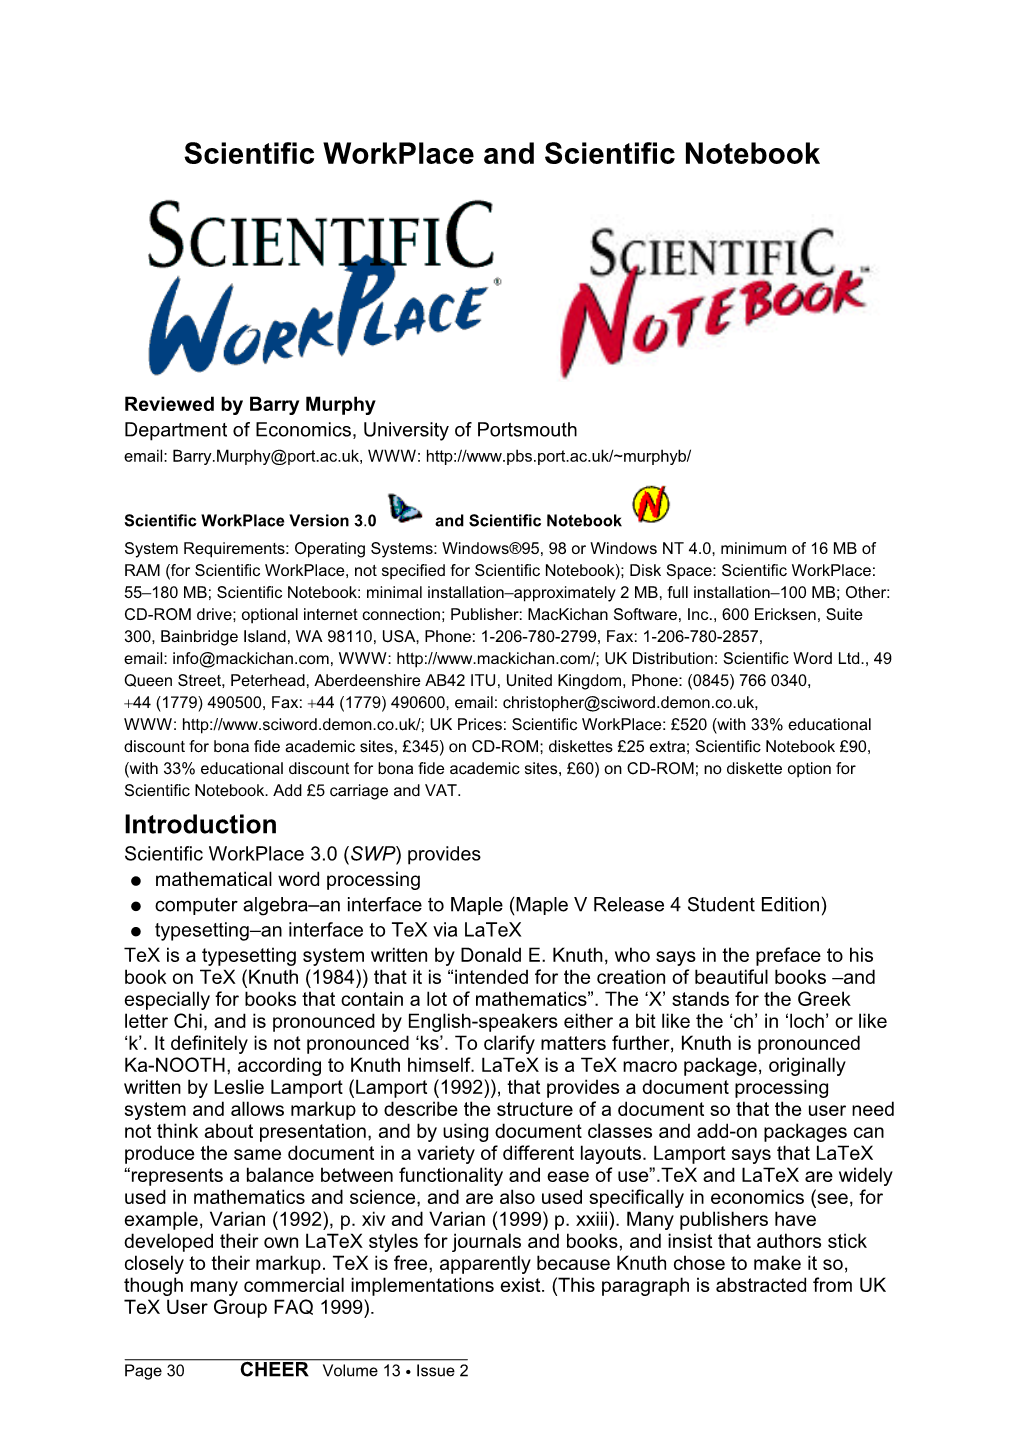 Scientific Workplace and Scientific Notebook Version 3